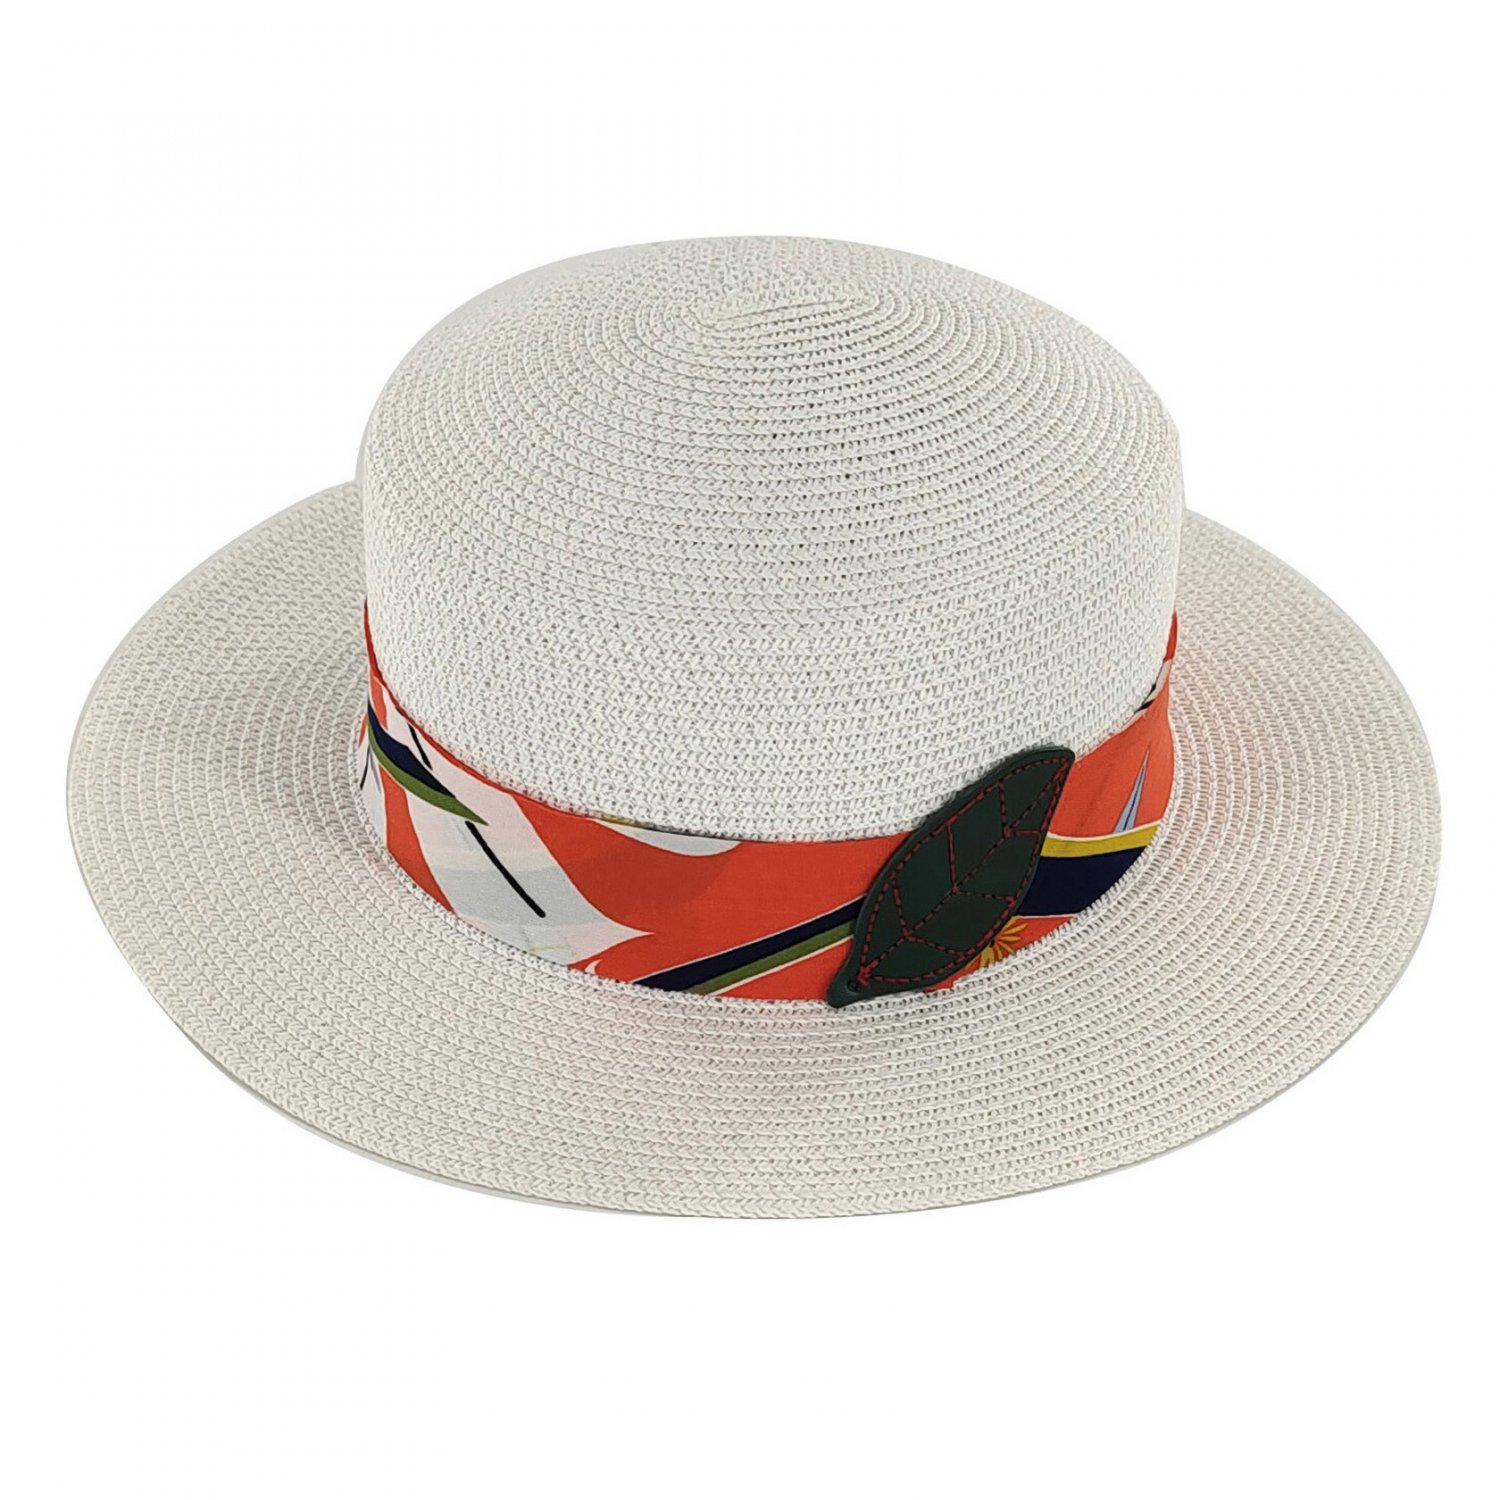 URSFUR Womens Summer Straw Hat DIY Beach Sun Cap Ladies 